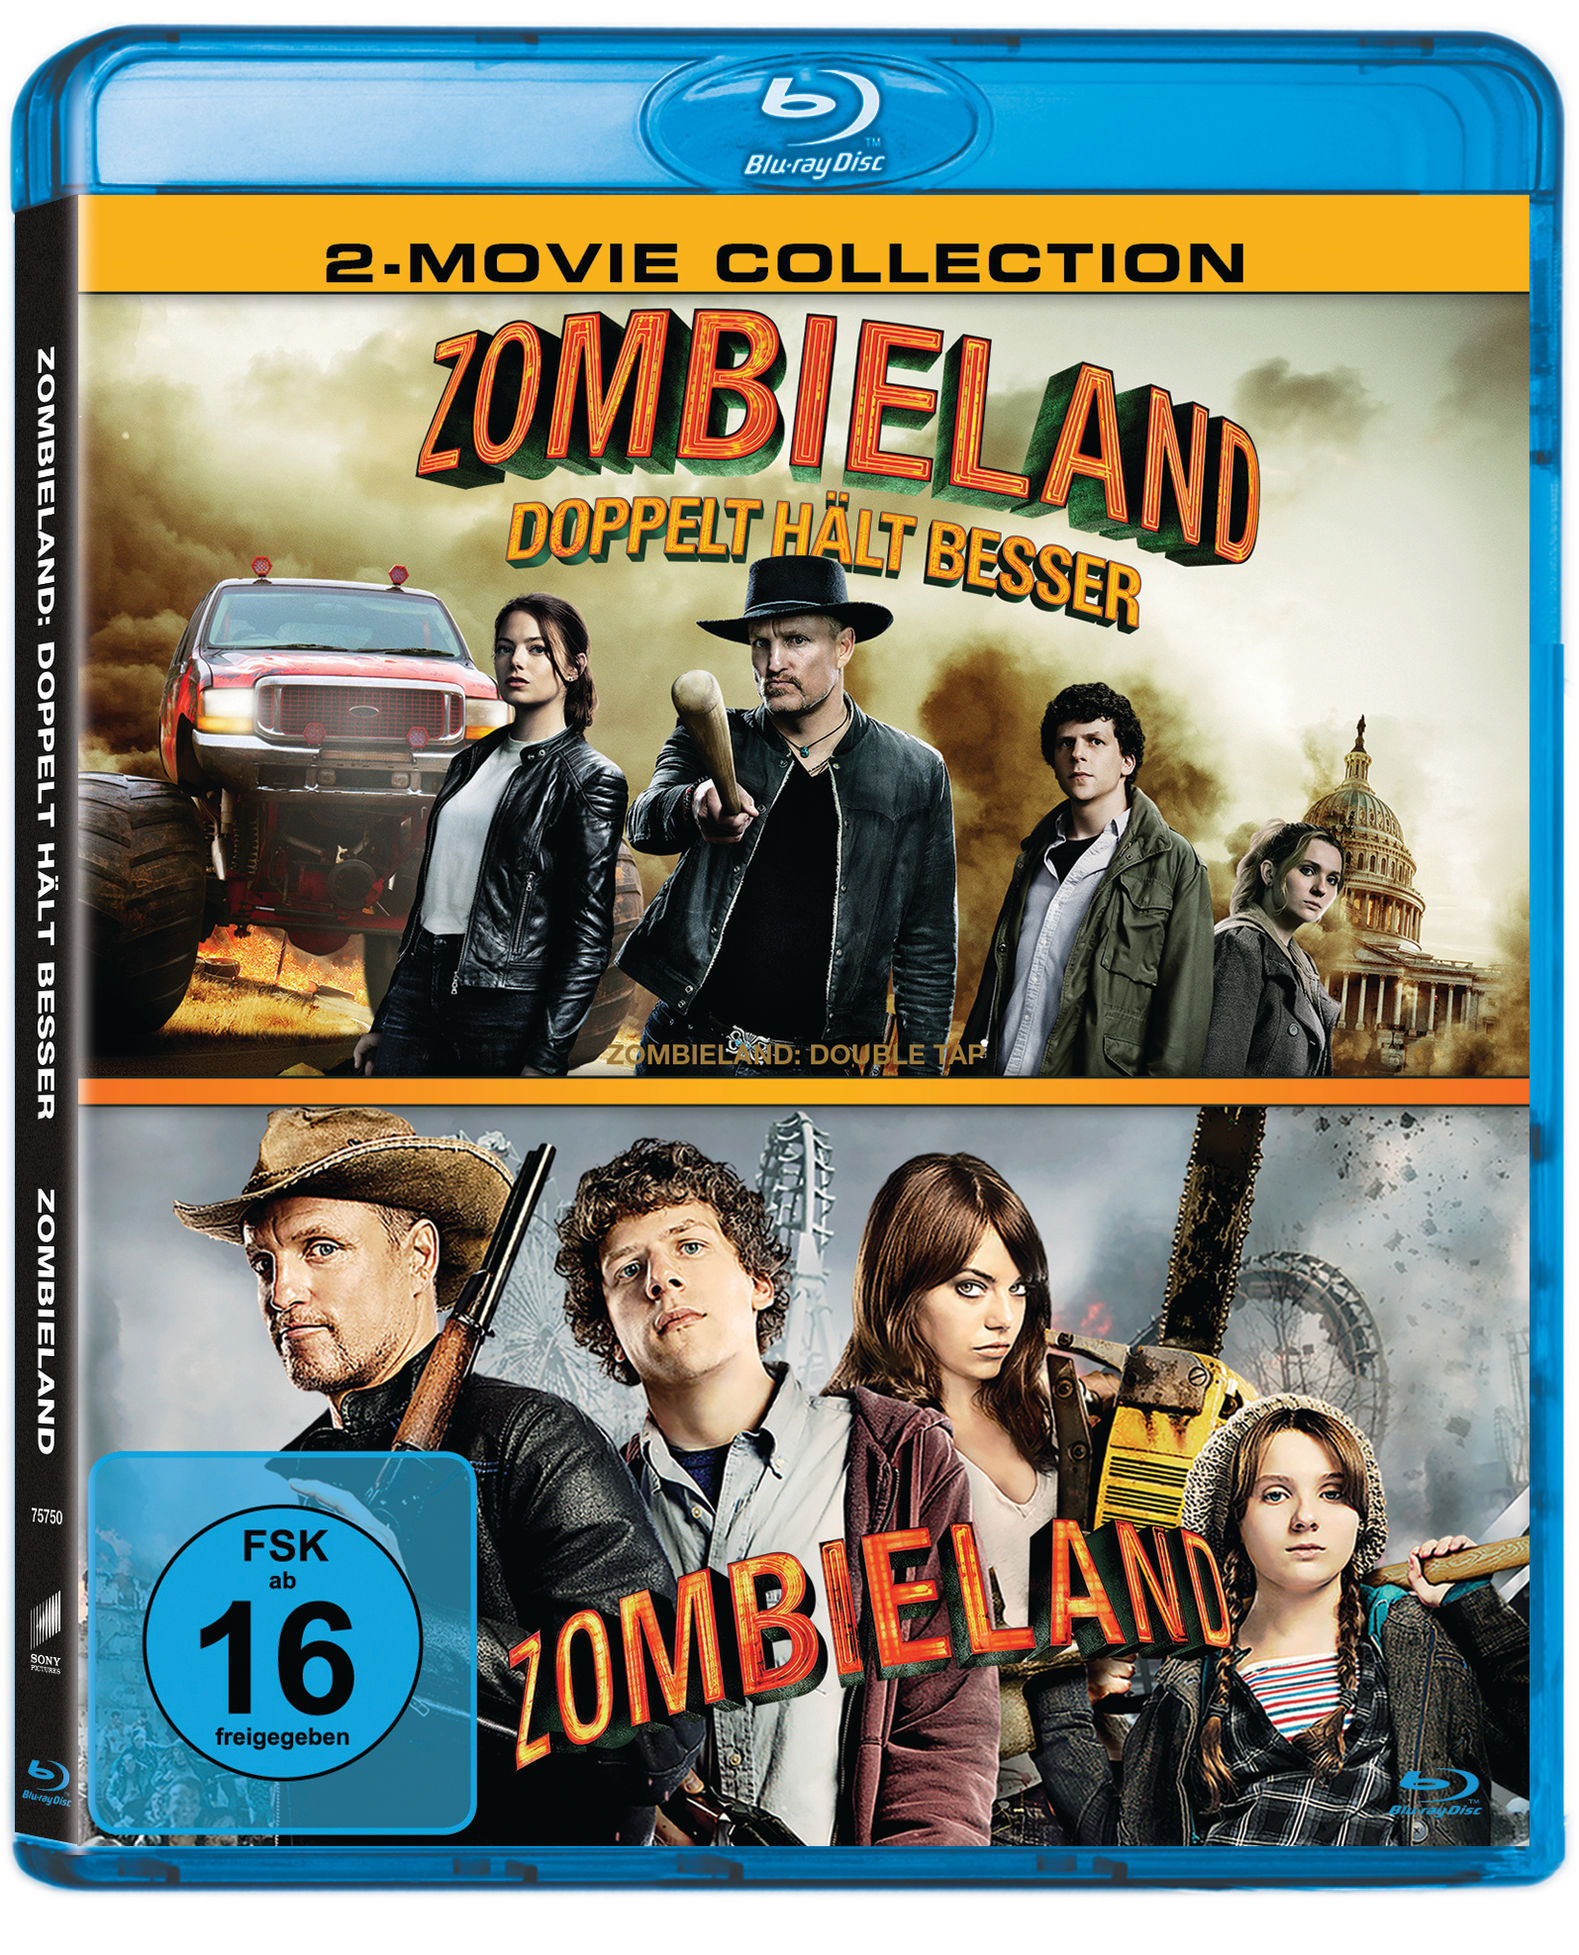 Zombieland 1 & 2 Blu-ray jetzt im Weltbild.de Shop bestellen